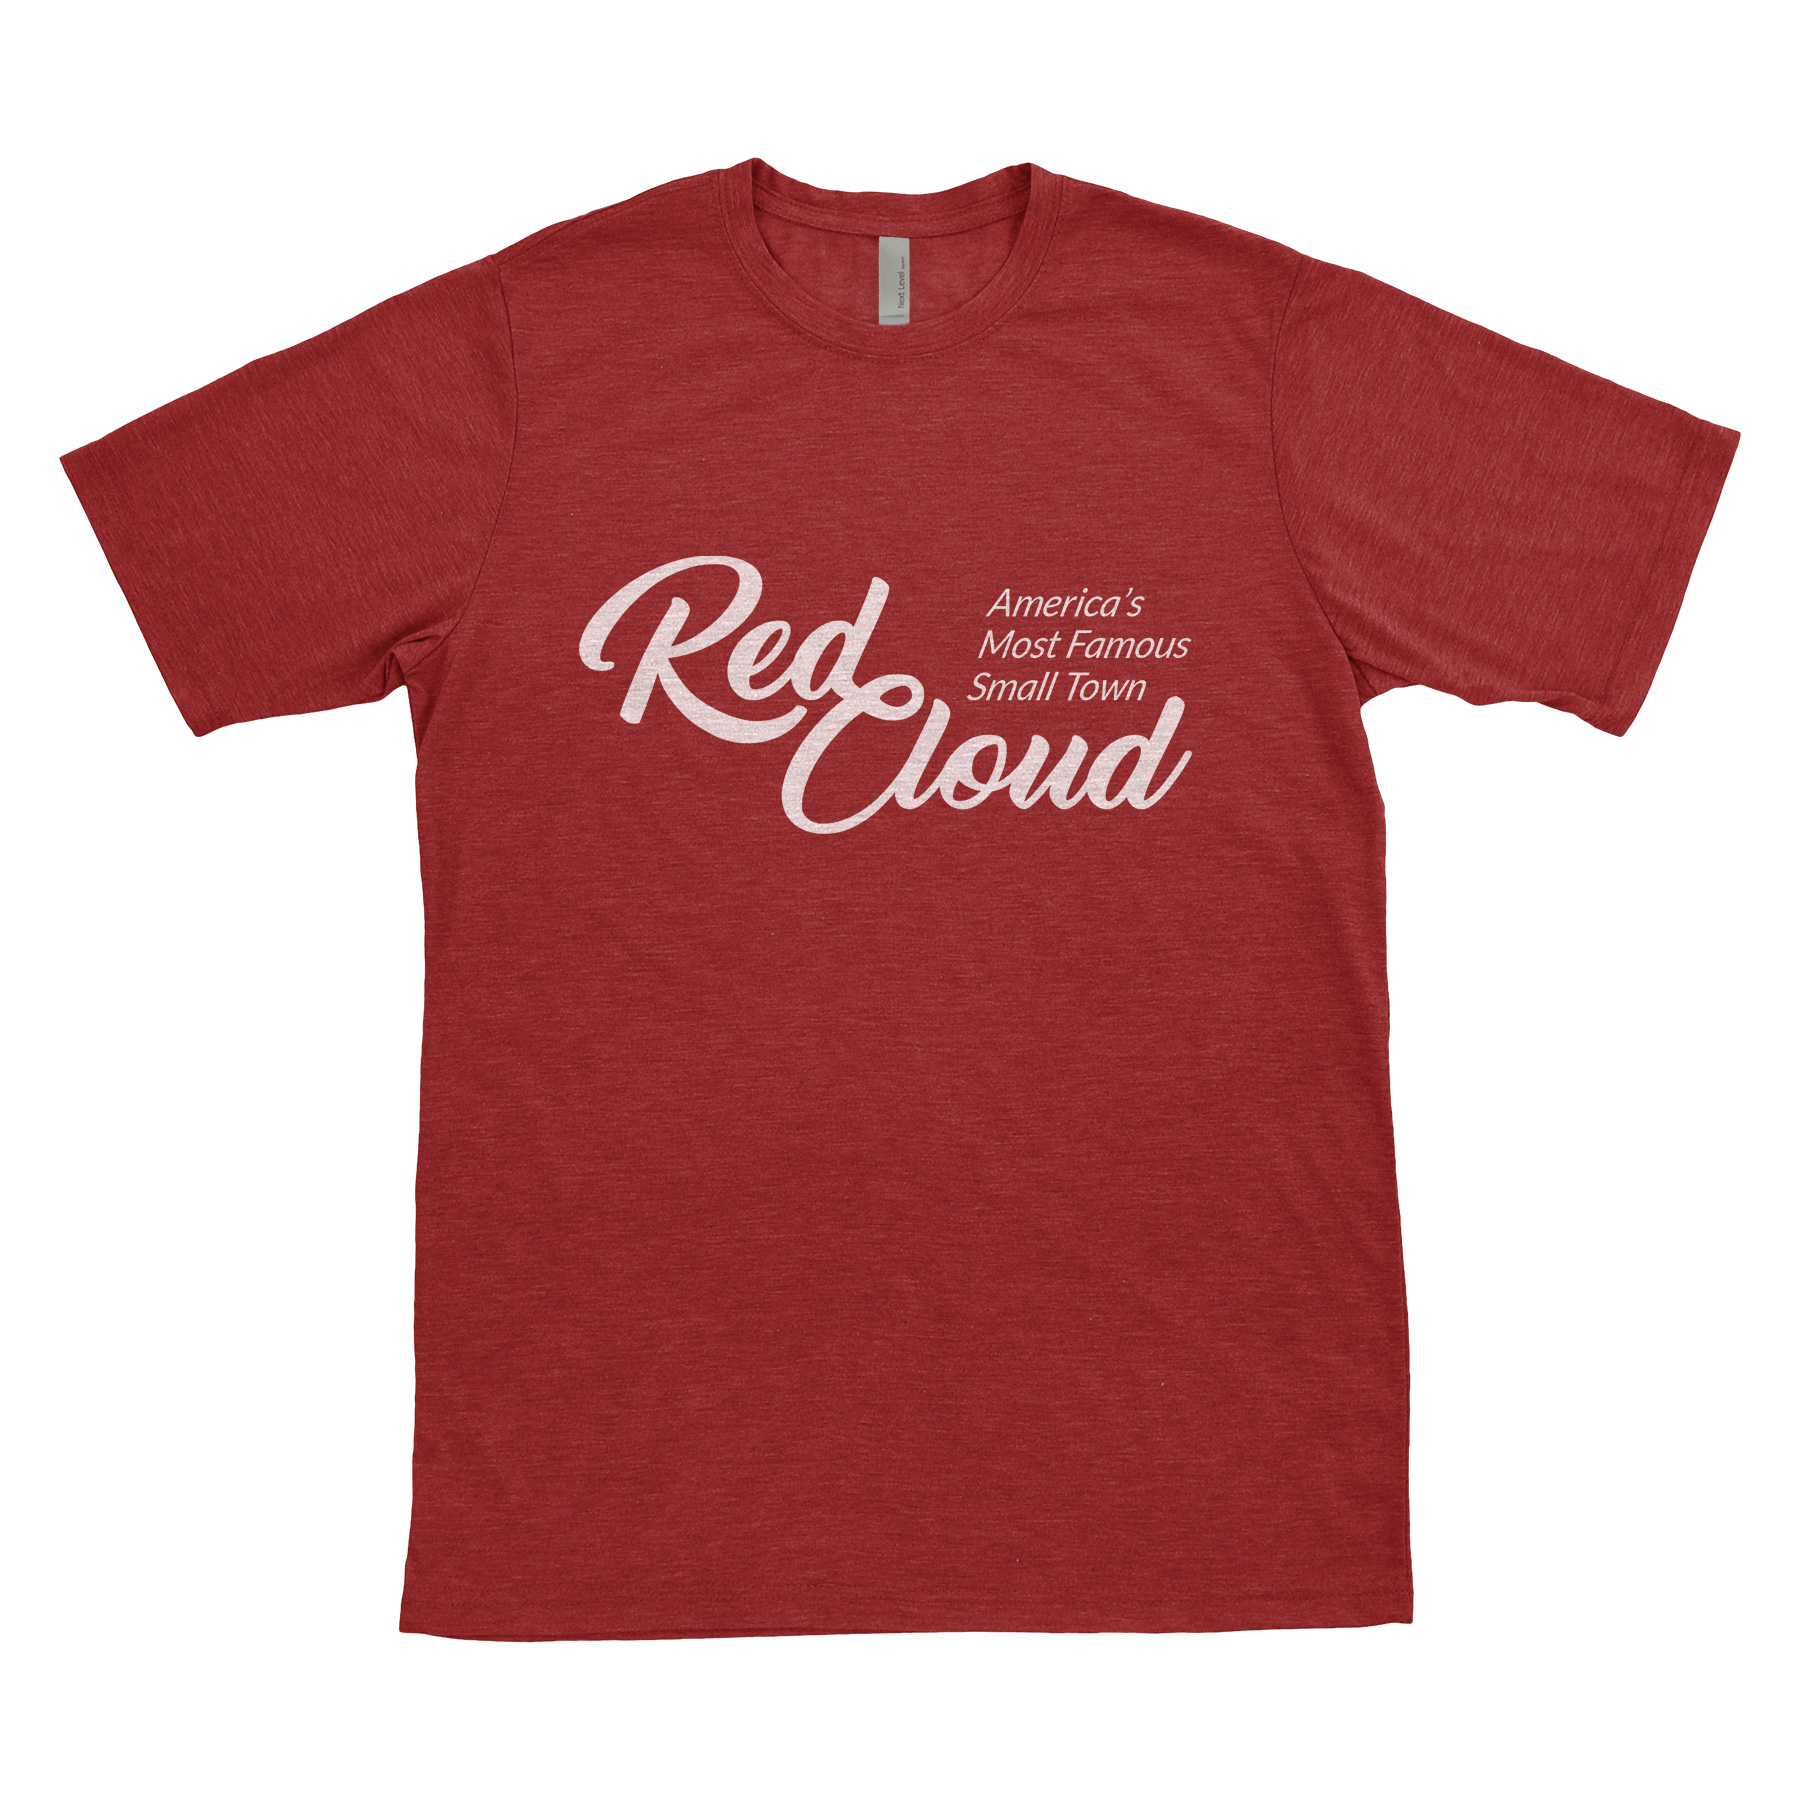 red cloud community tshirt design red